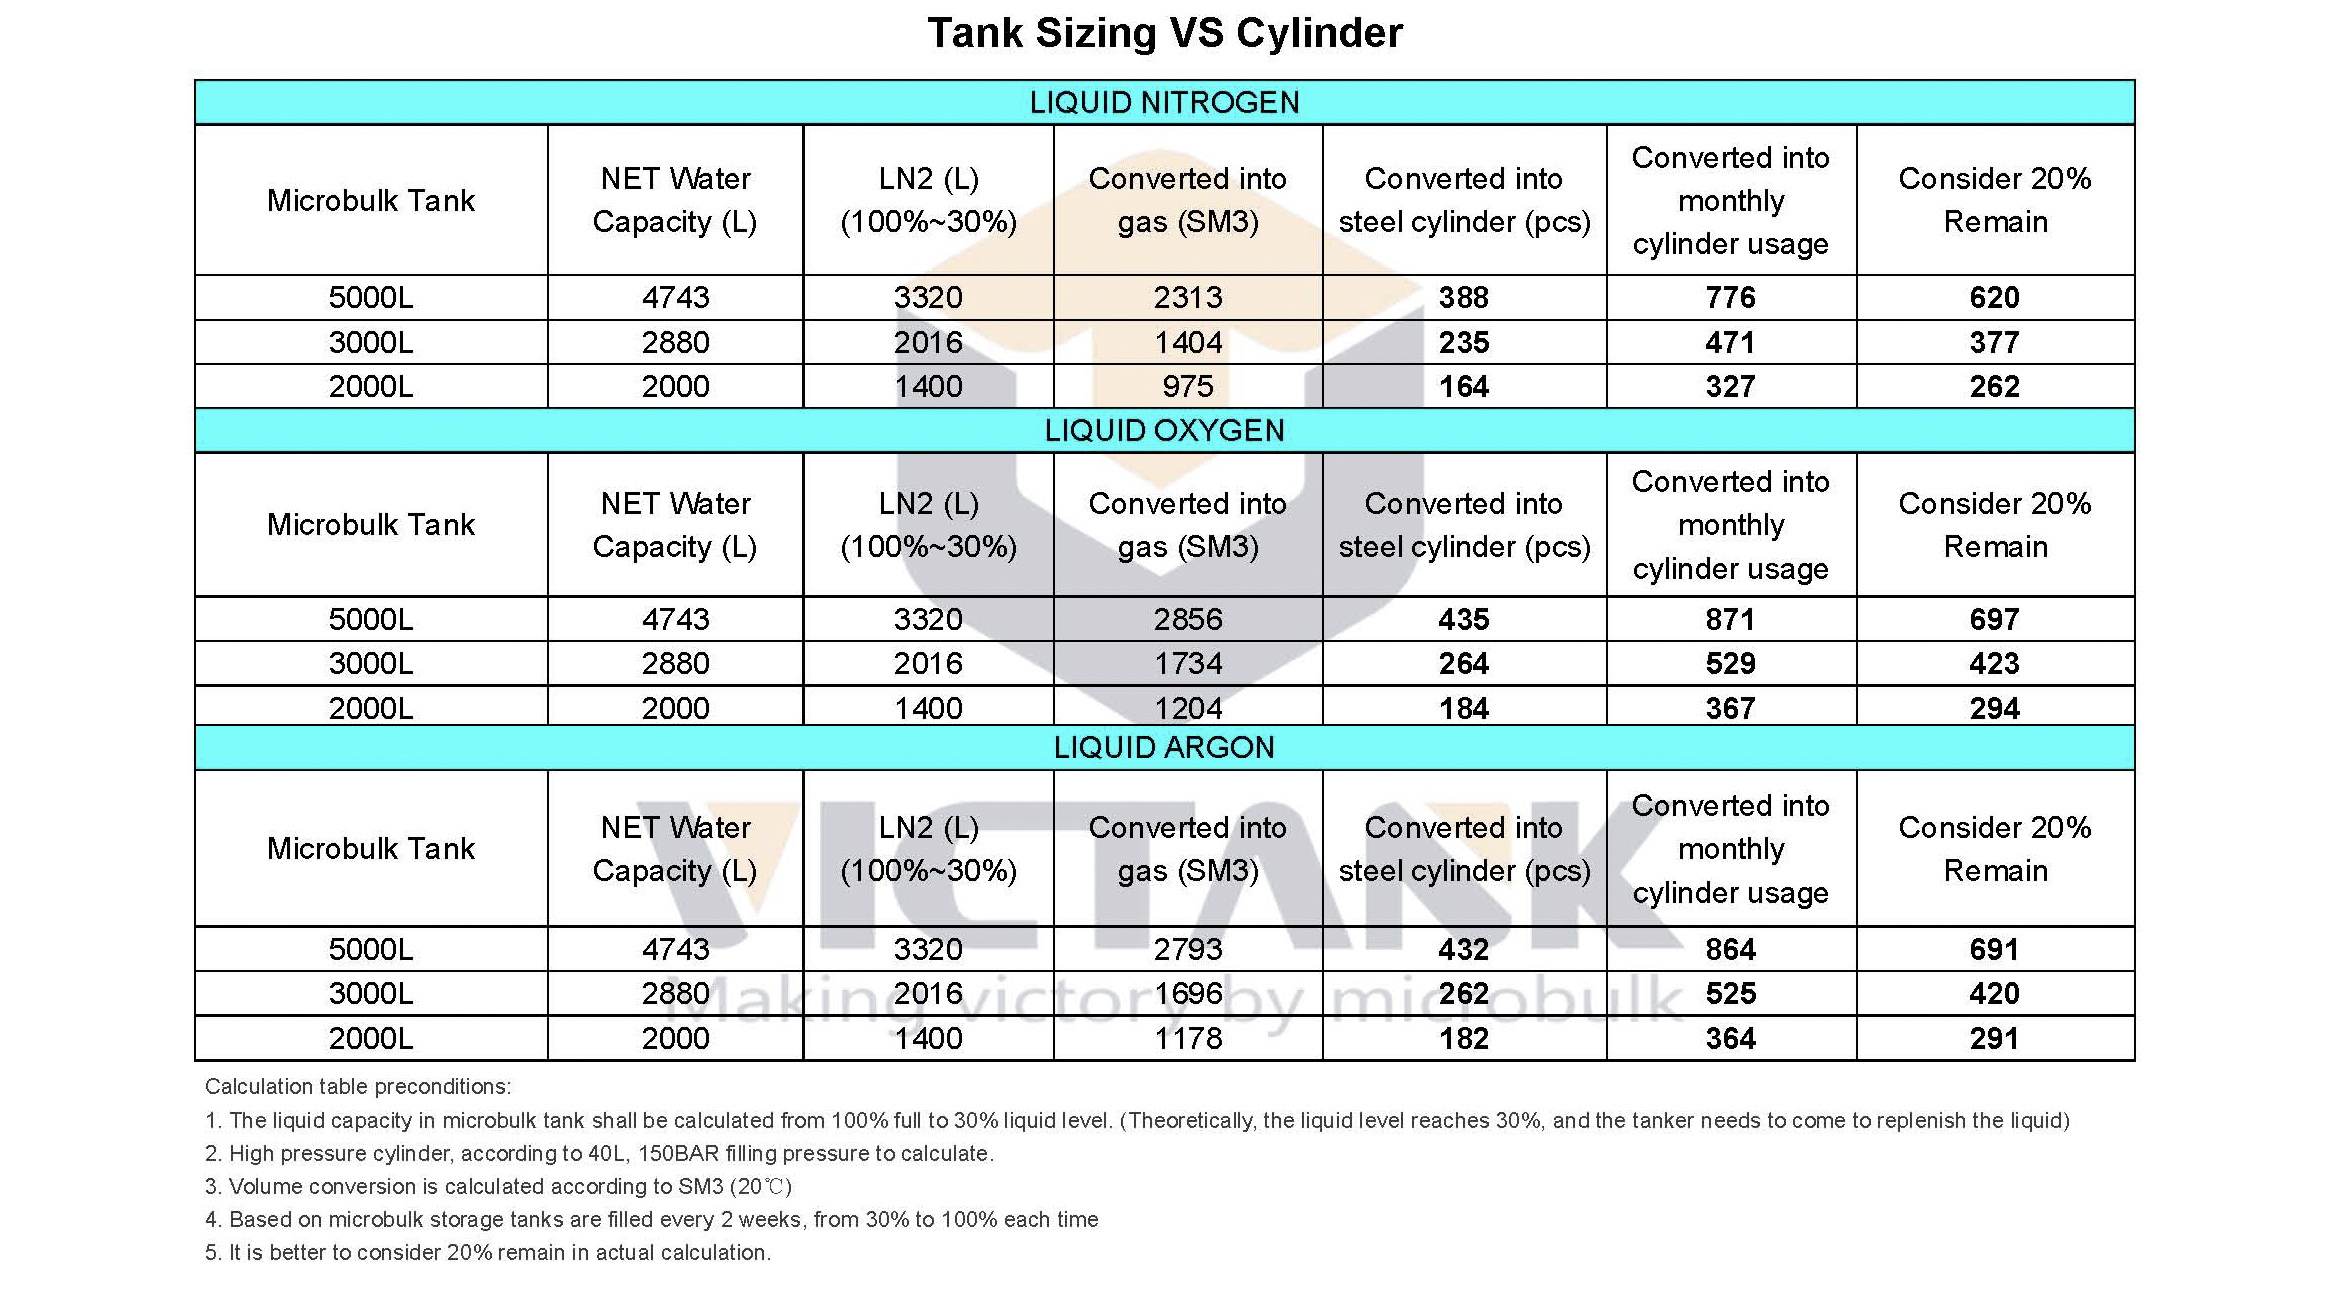 1. Tank Sizing VS Cylinder